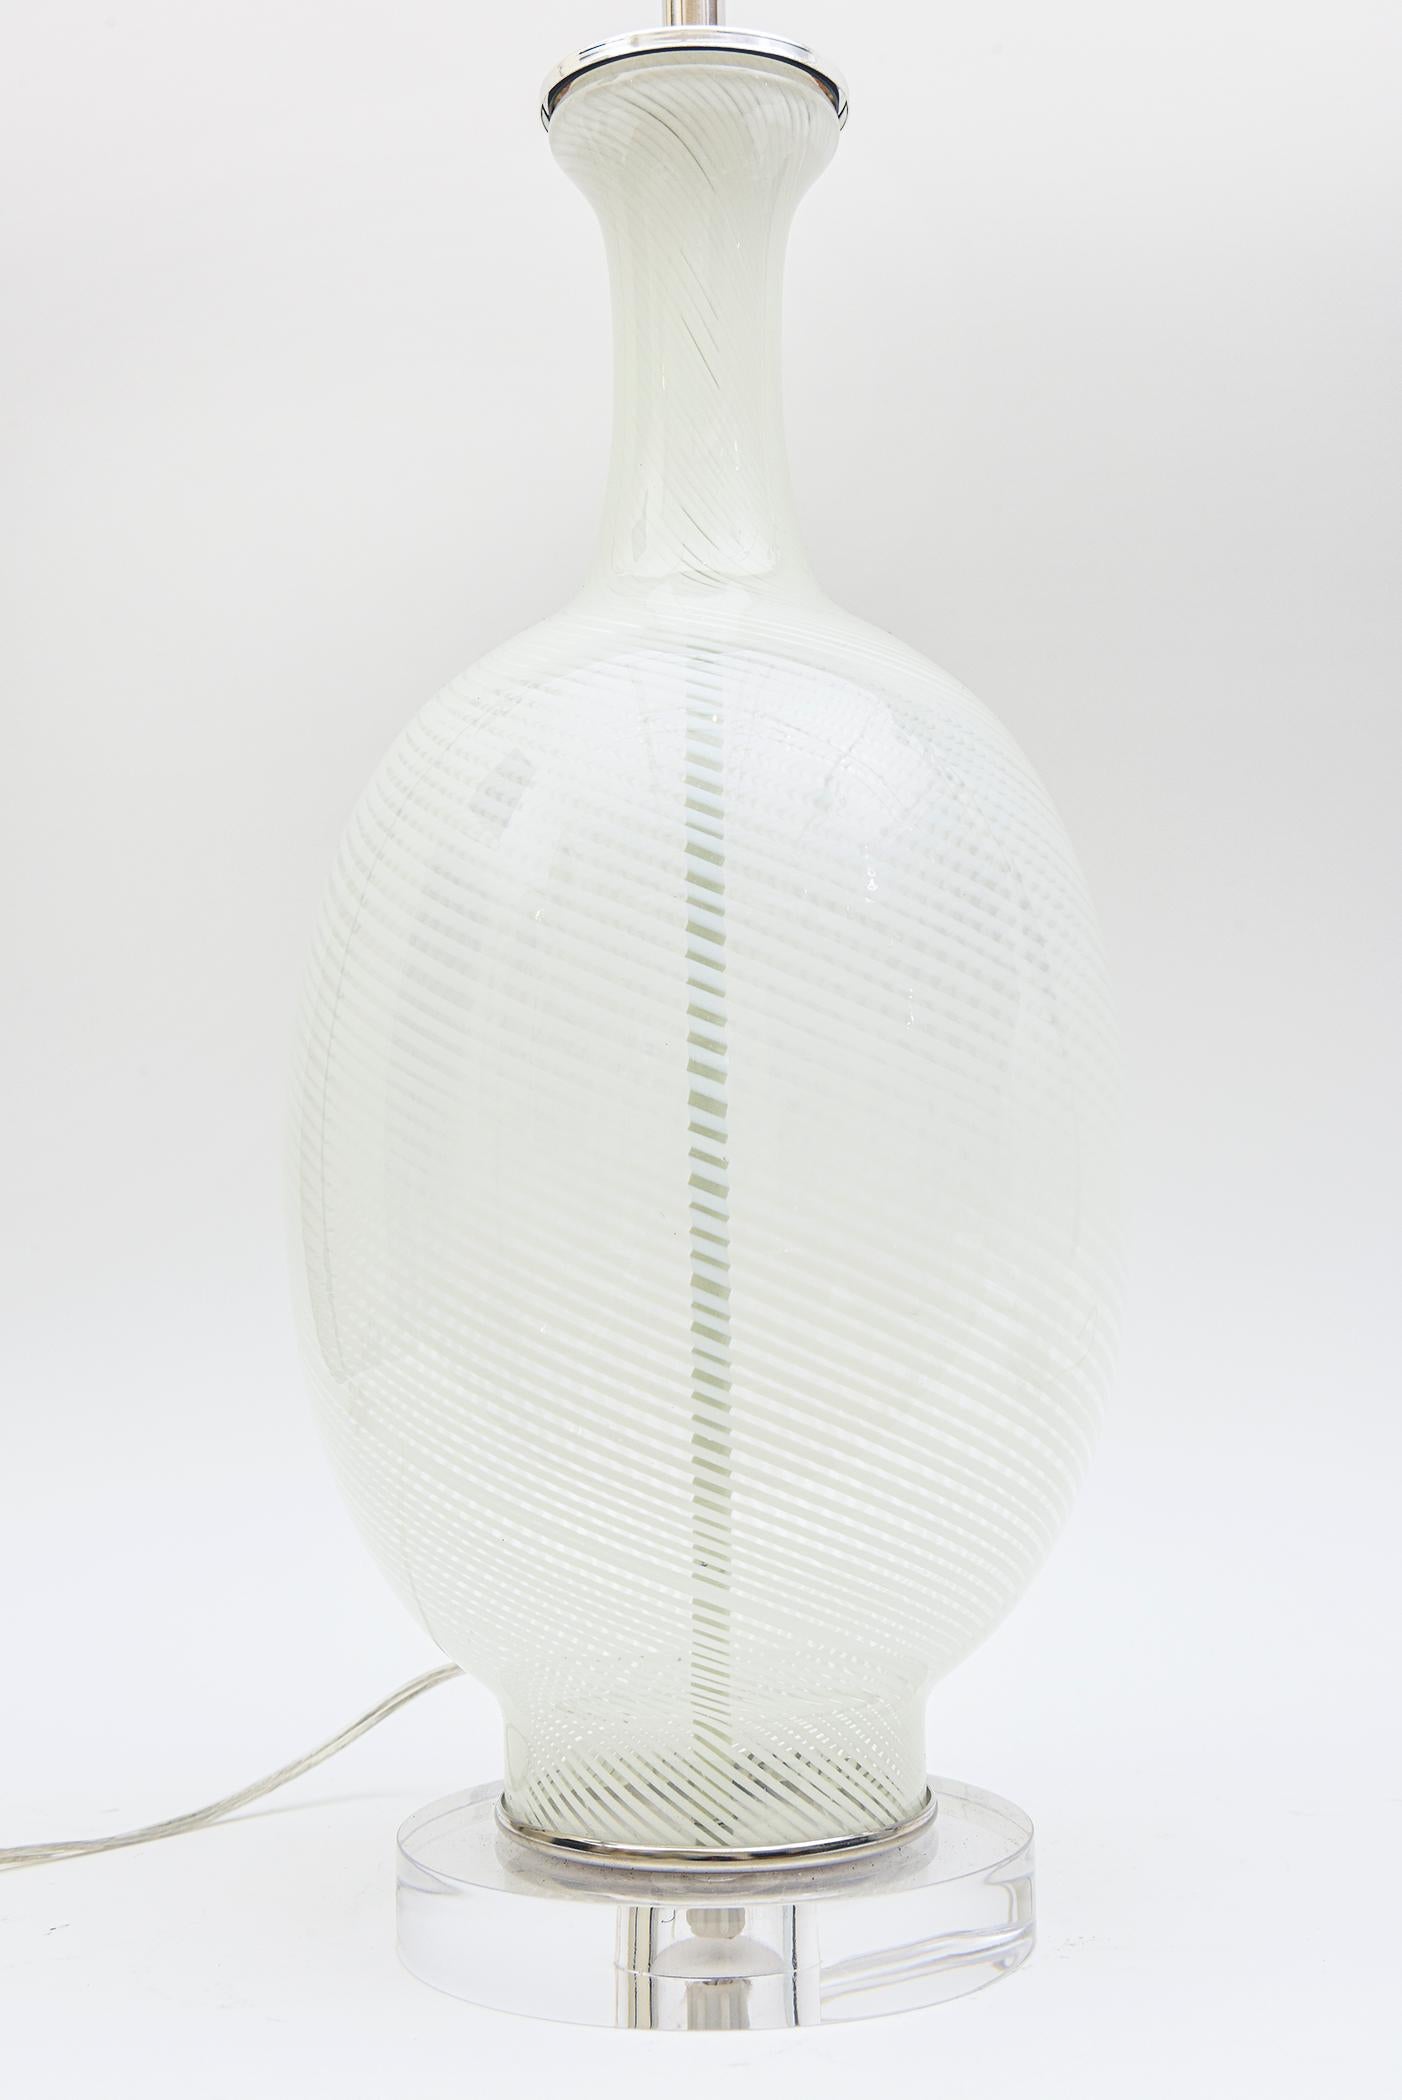 Européen Aureliano Toso Murano lampes vintage blanches tourbillonnantes avec fleurons en verre  en vente